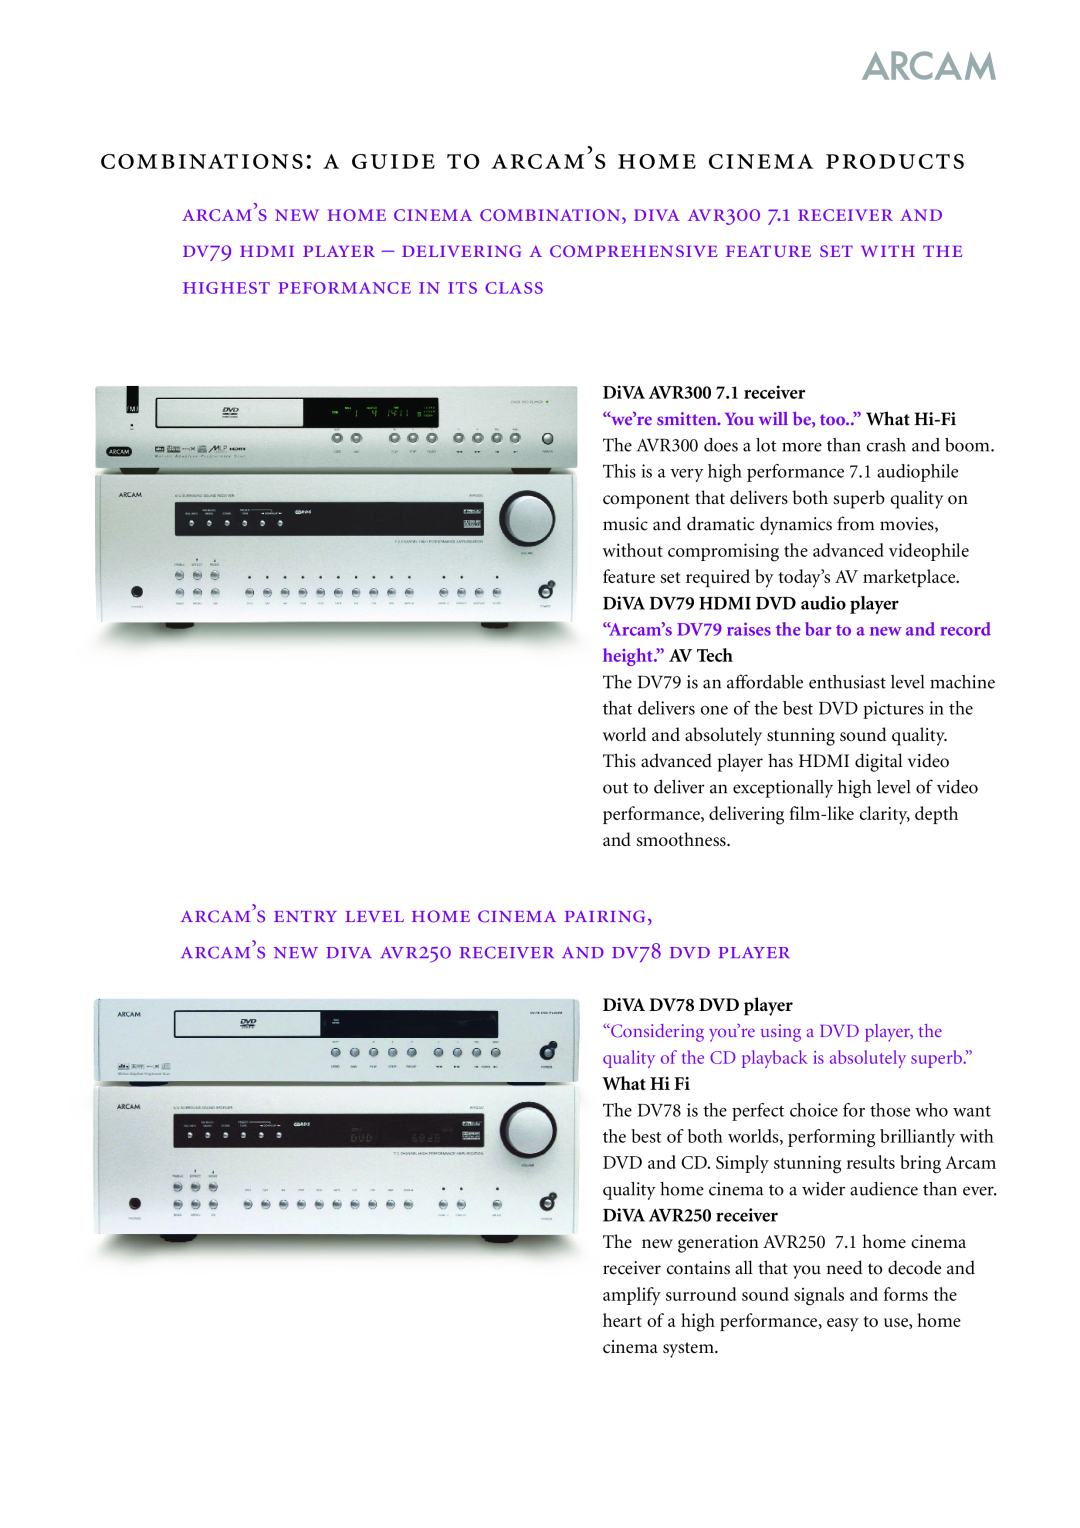 Arcam P7 DiVA AVR300 7.1 receiver, DiVA DV79 HDMI DVD audio player, DiVA DV78 DVD player, What Hi Fi, DiVA AVR250 receiver 